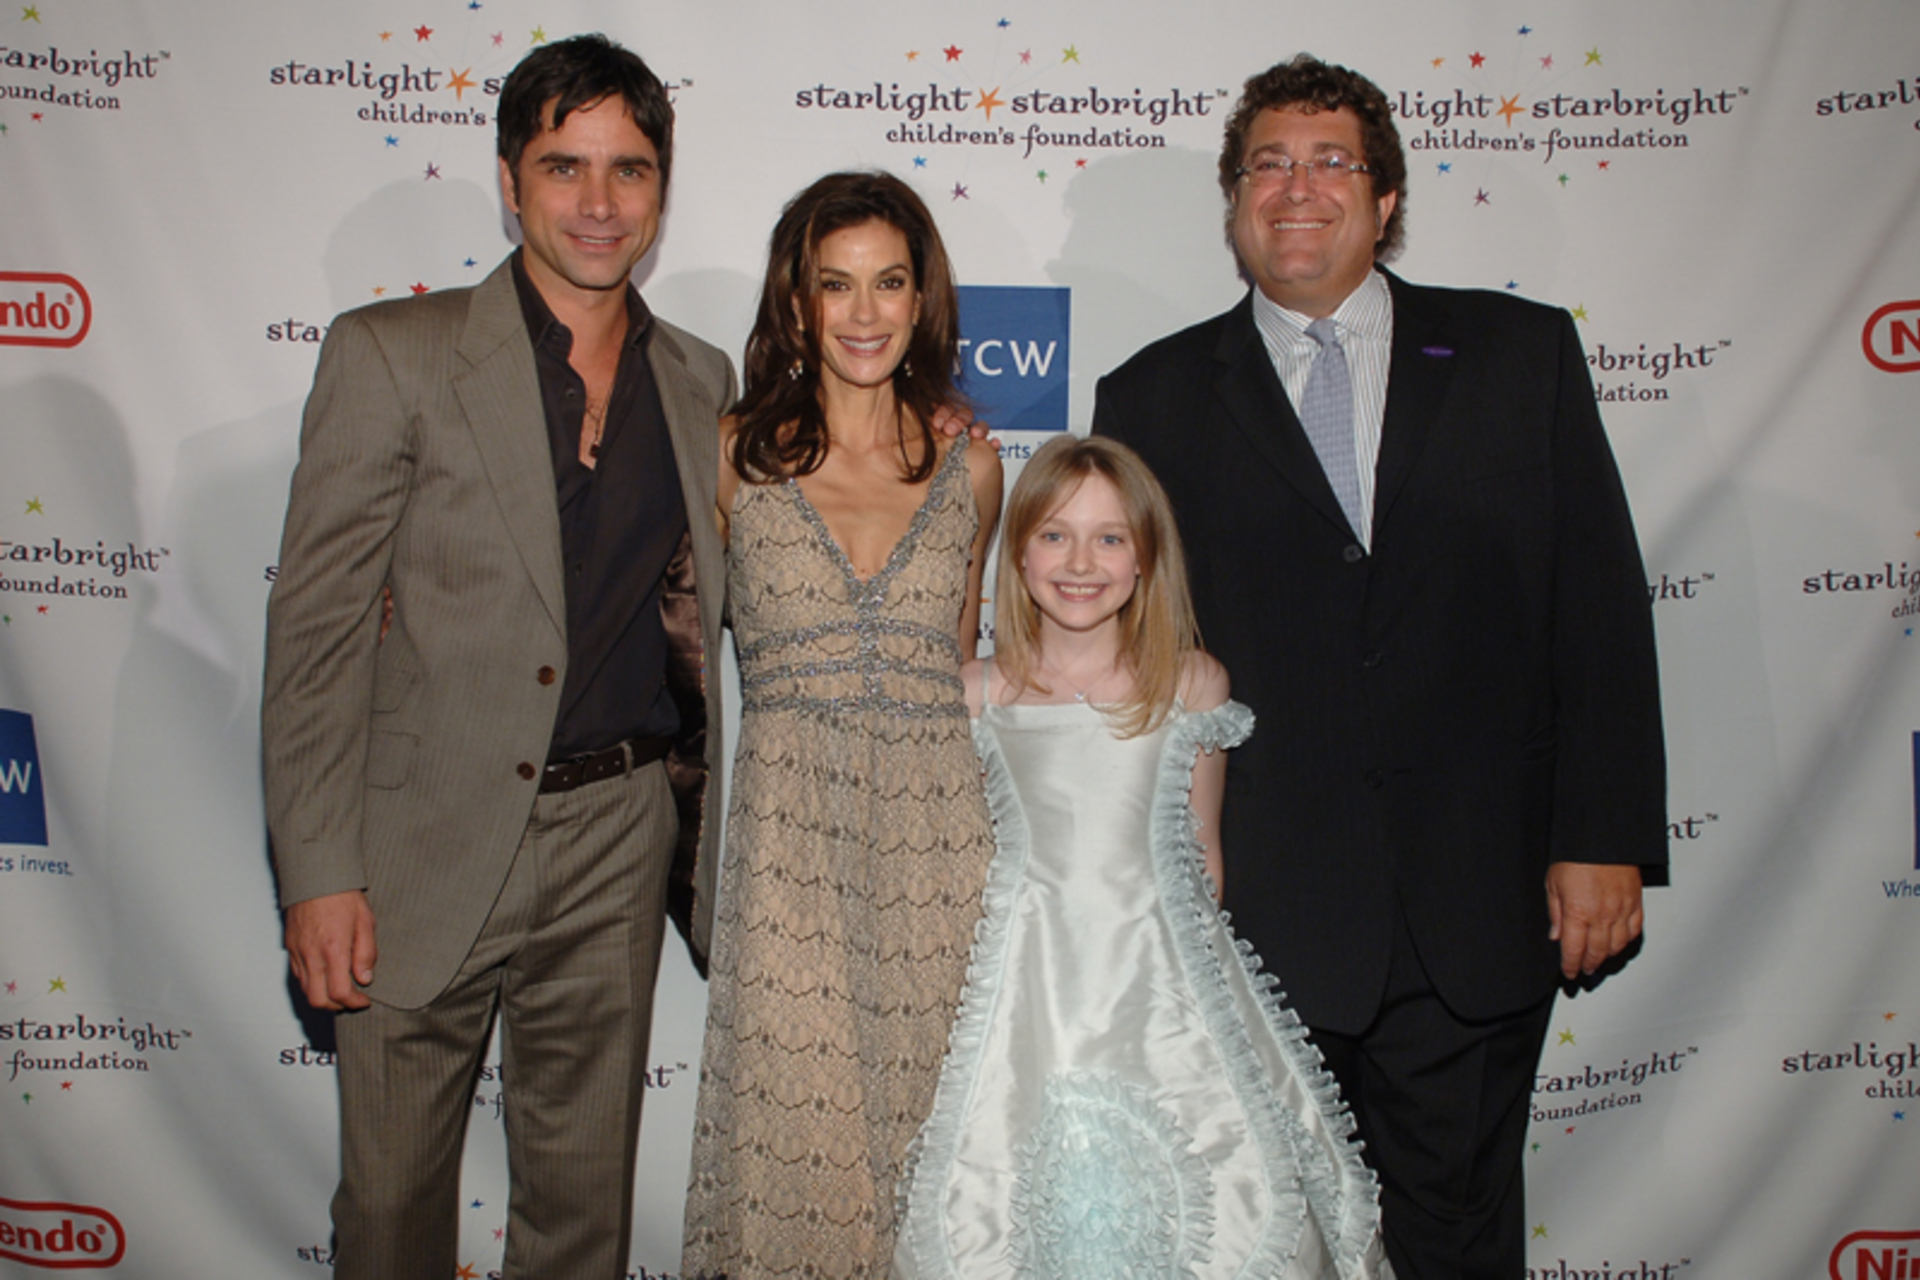 John Stamos, Teri Hatcher, Dakota Fanning, and Roger Shiffman at the 2006 Starlight Gala.